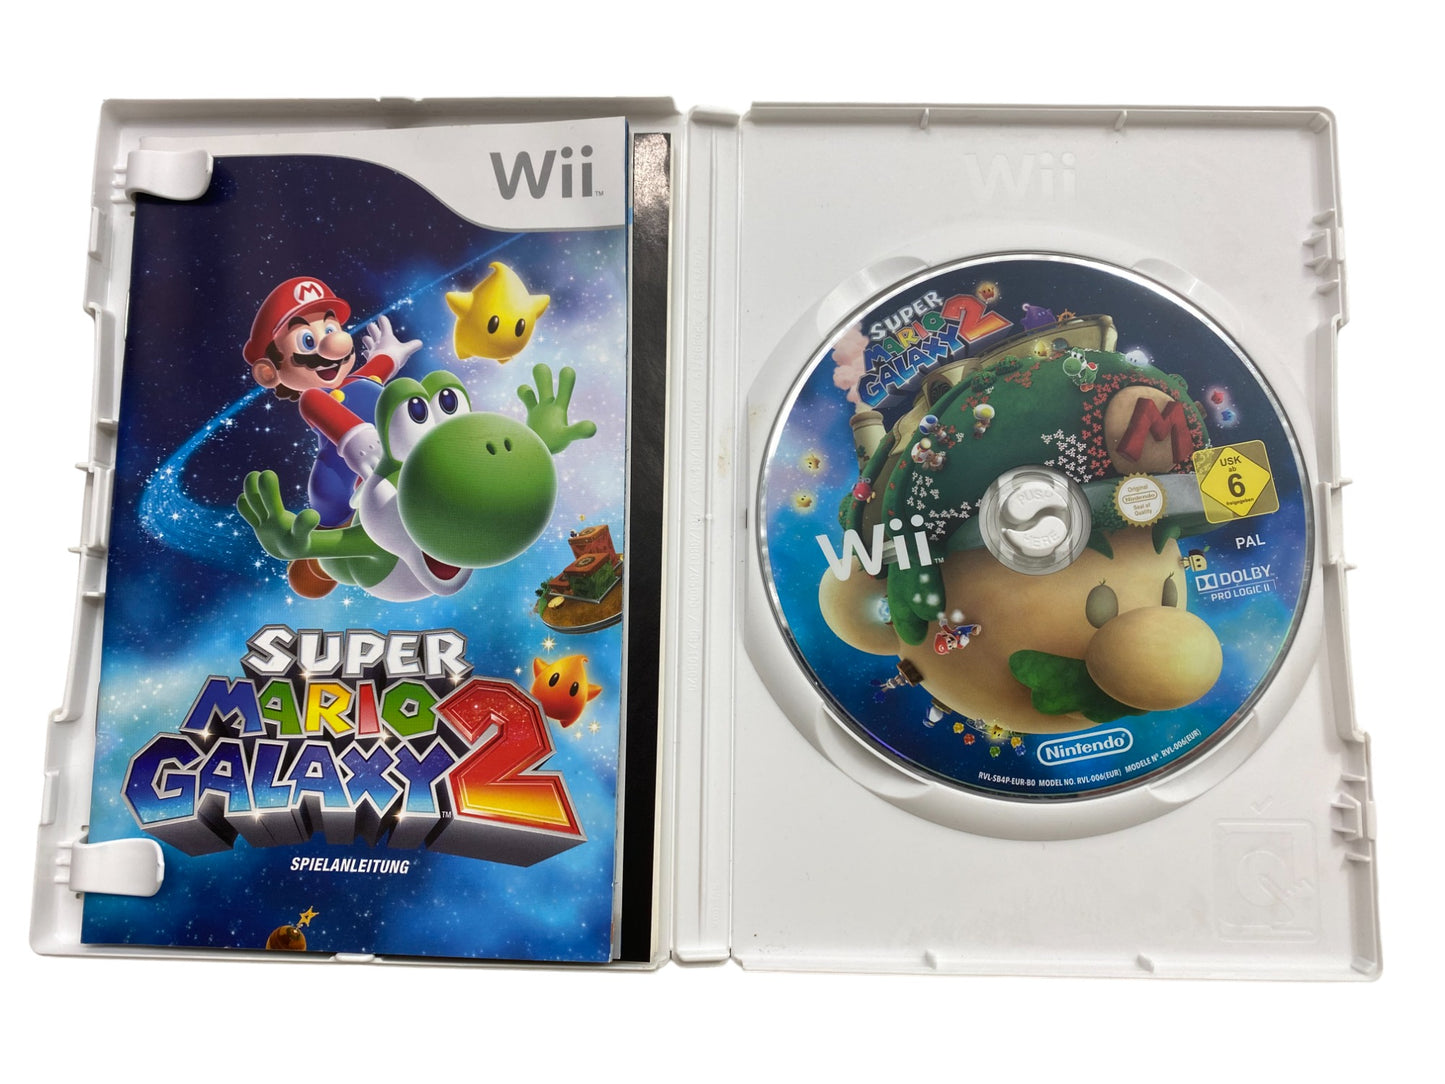 Super Mario Galaxy 2 - Nintendo Wii (CD KRATZFREI)